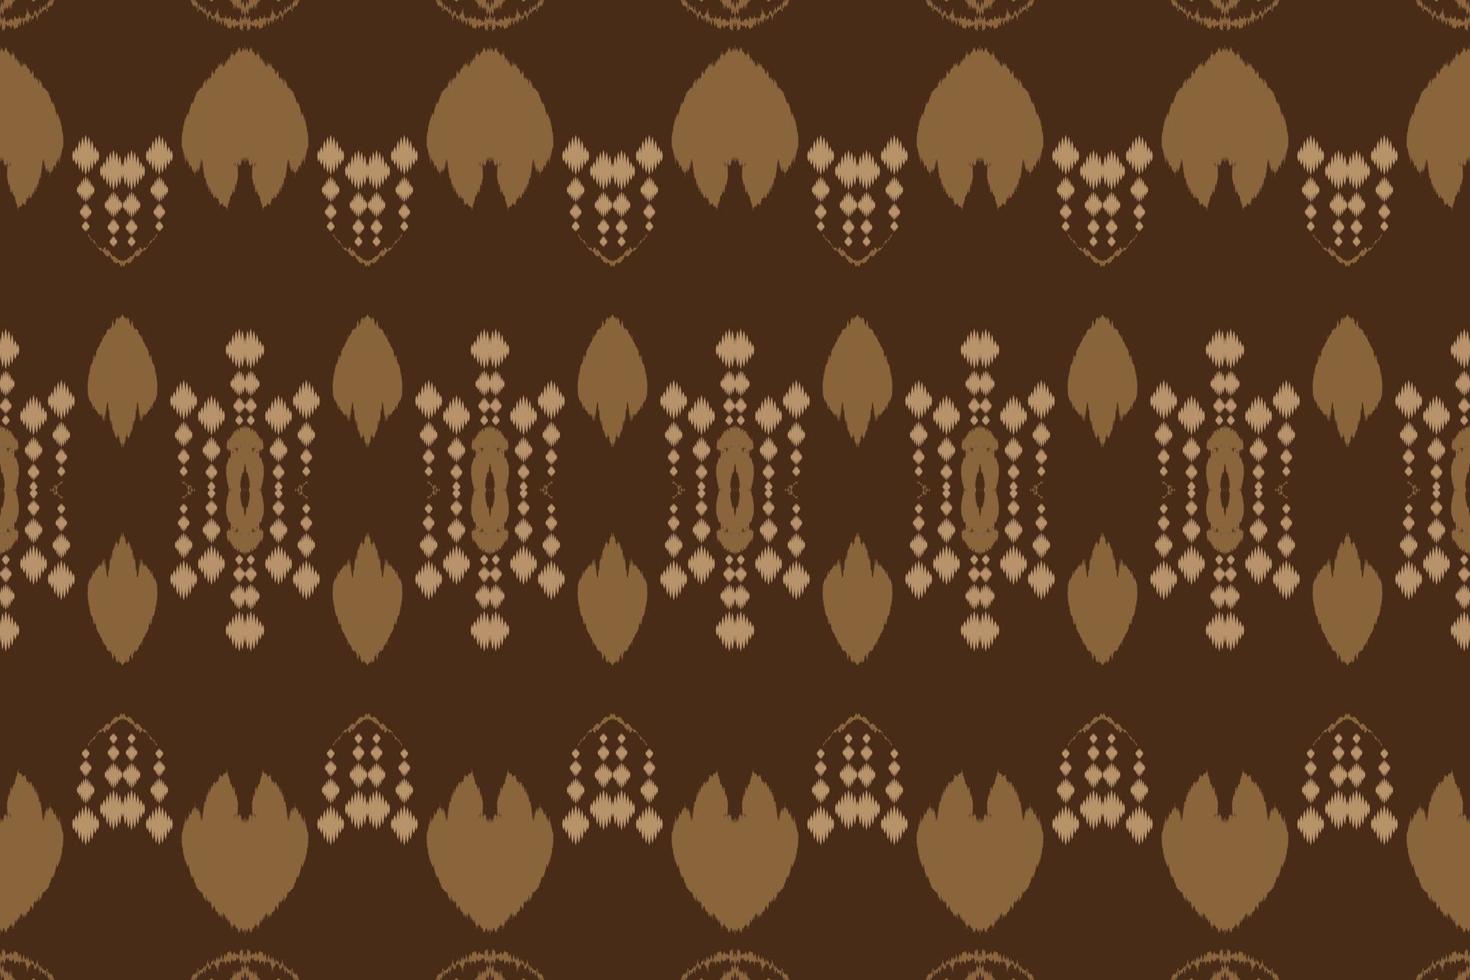 ikat frontera tribal áfrica patrón sin costuras. étnico geométrico ikkat batik vector digital diseño textil para estampados tela sari mughal cepillo símbolo franjas textura kurti kurtis kurtas